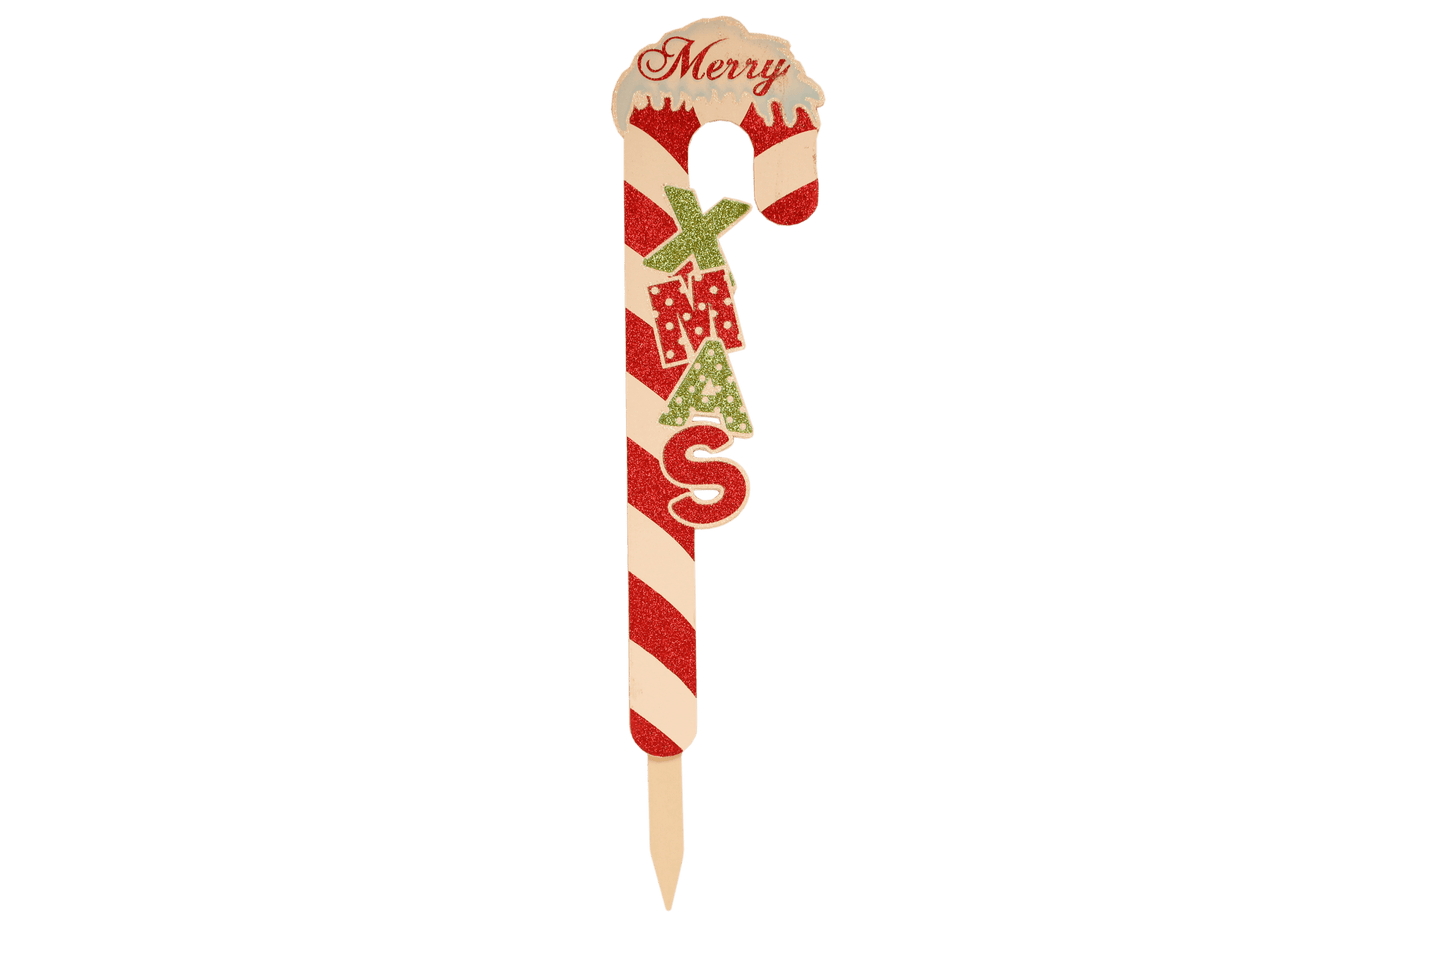 Merry Xmas Candy Cane Pick (1 piece)